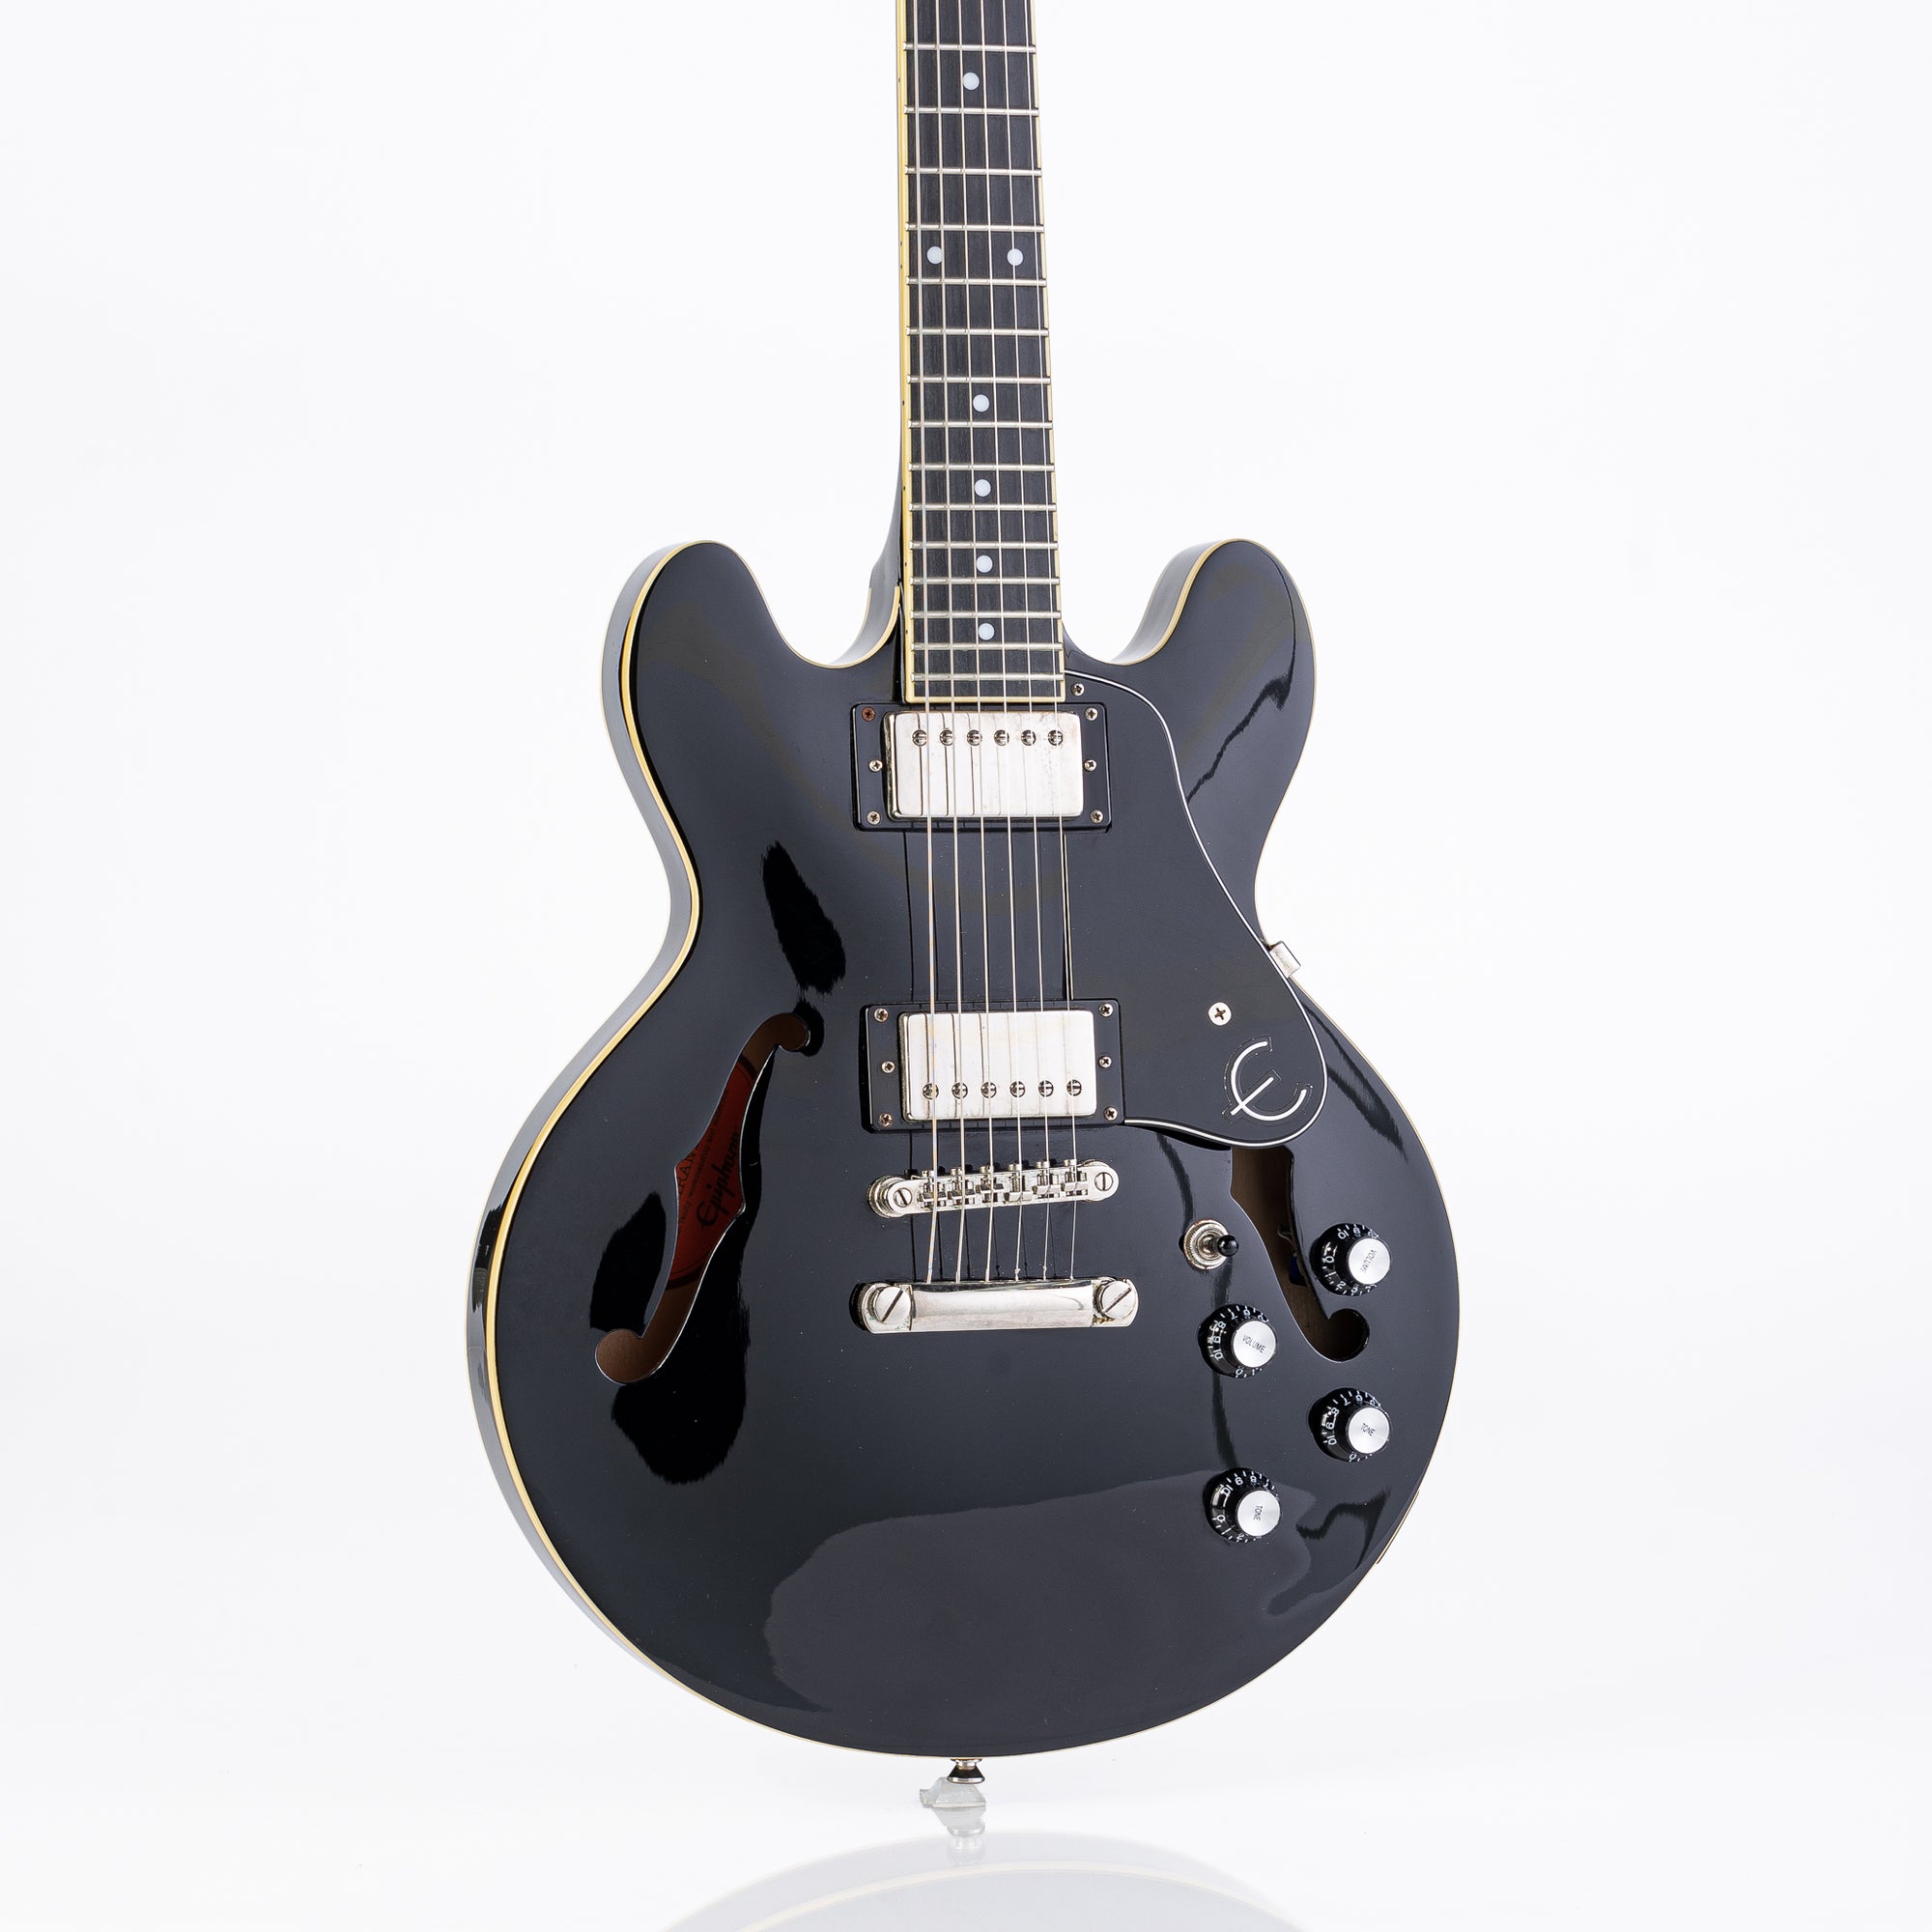 USED Epiphone DOT ES-339 Semi-Hollow Electric Guitar- Black W/HSC